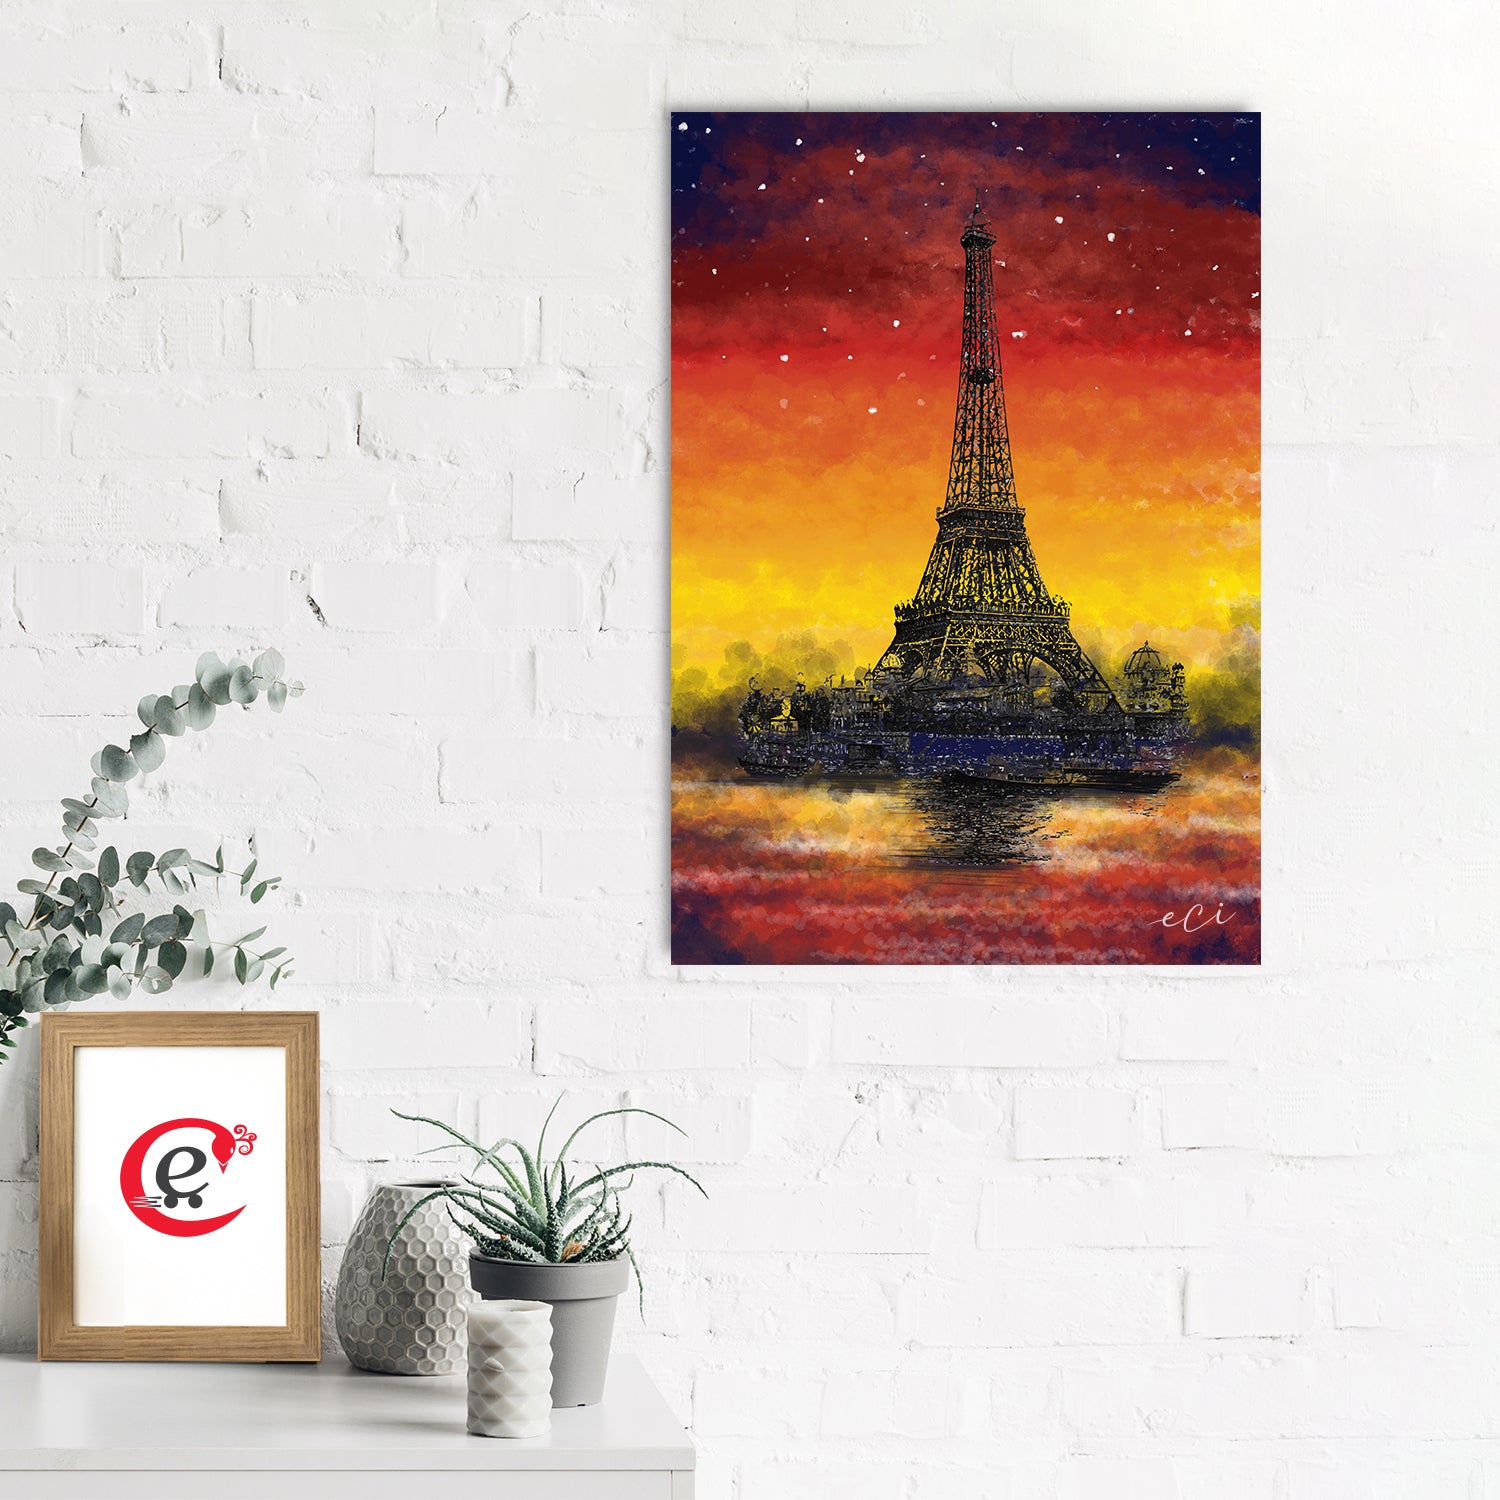 Paris Eiffel Tower Canvas Painting Digital Printed Religious Wall Art 1